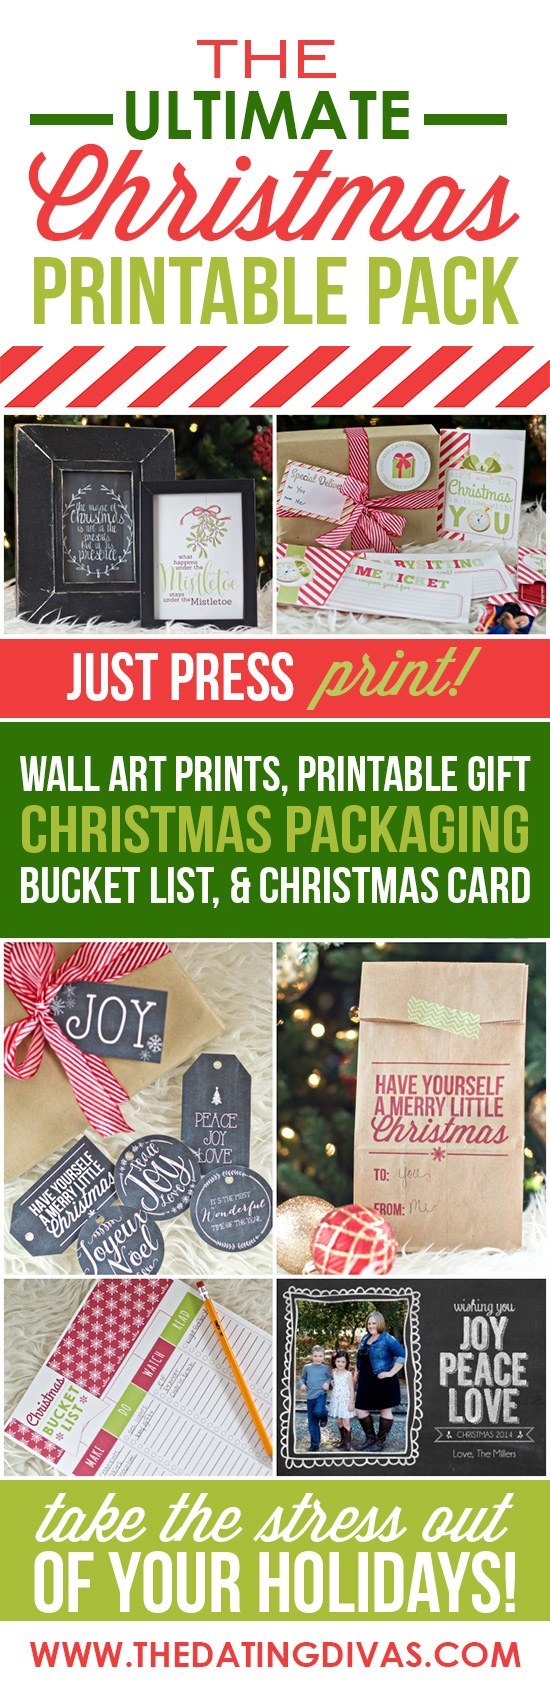 The Ultimate Christmas Printable Pack